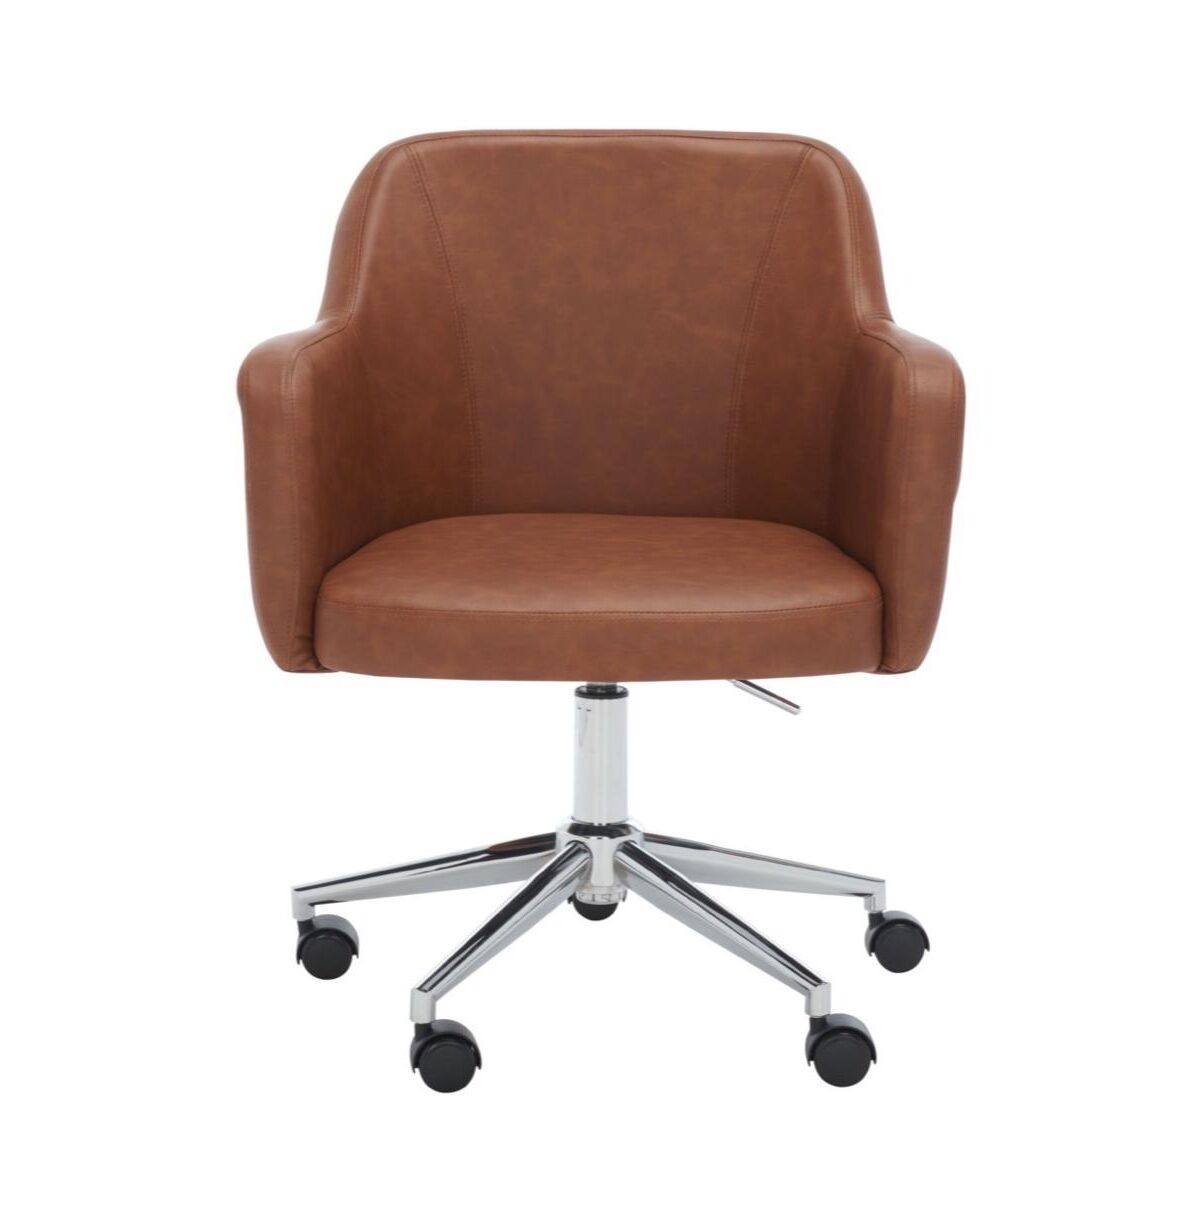 Safavieh Kains Swivel Office Chair - Cognac/chrome